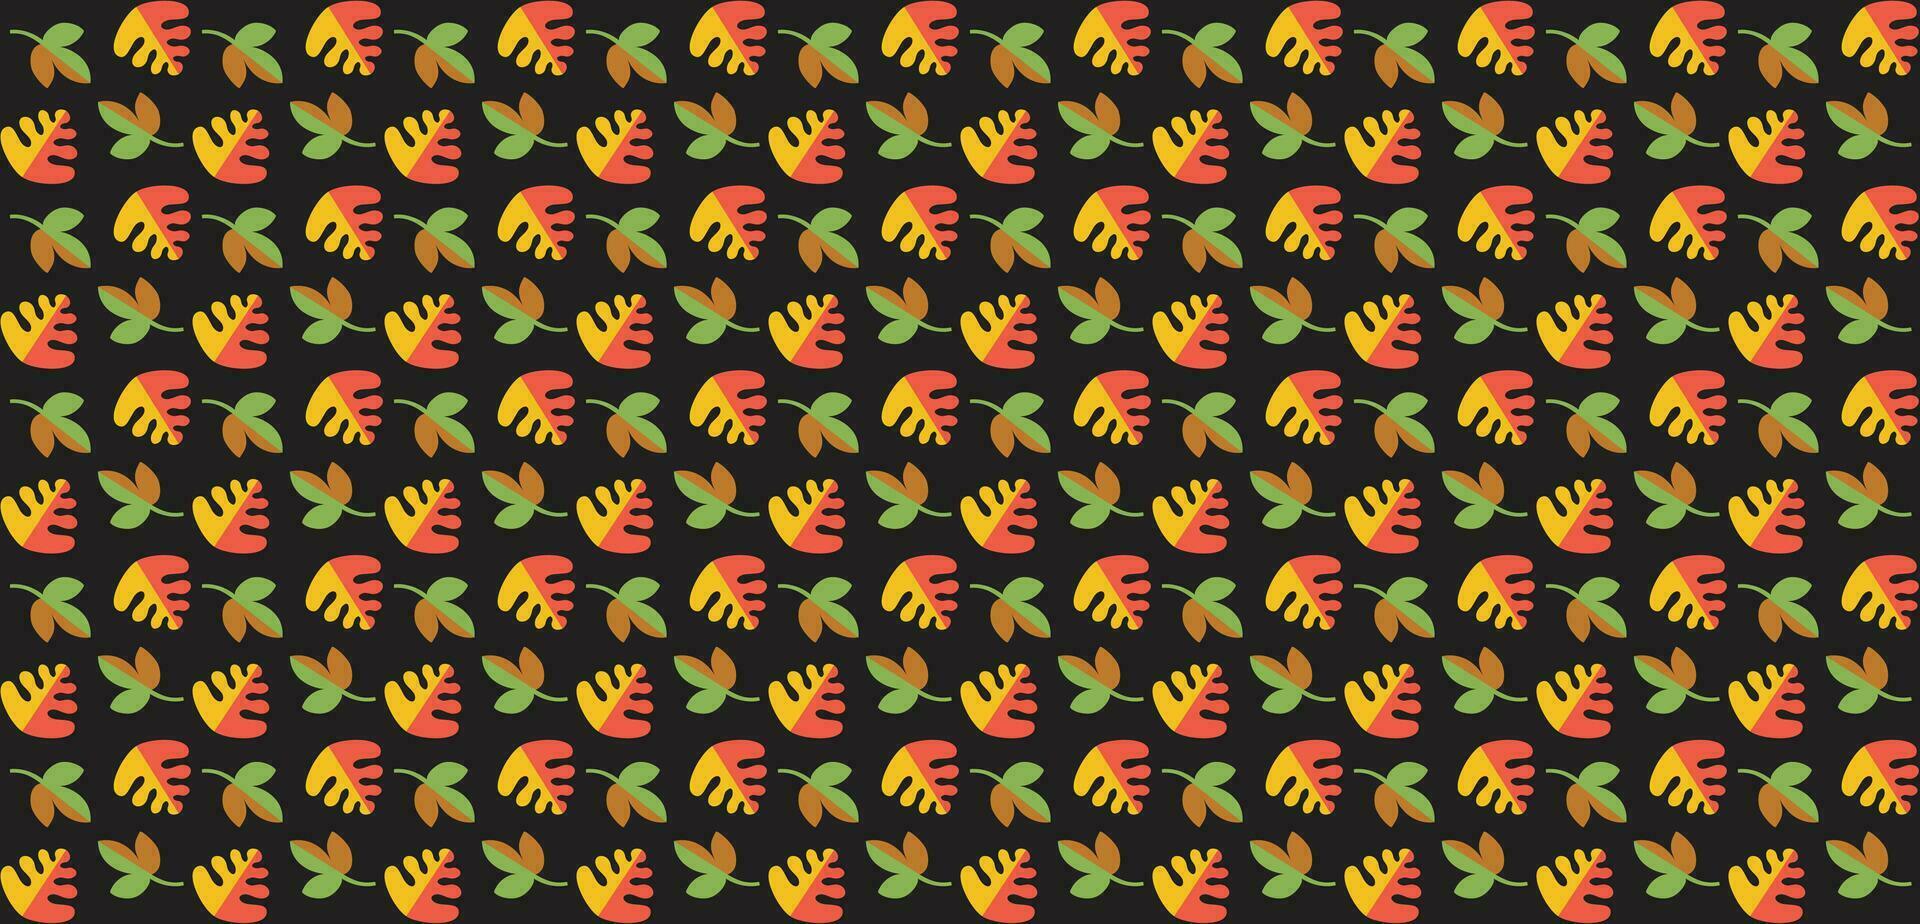 Background wallpaper vector design flower pattern